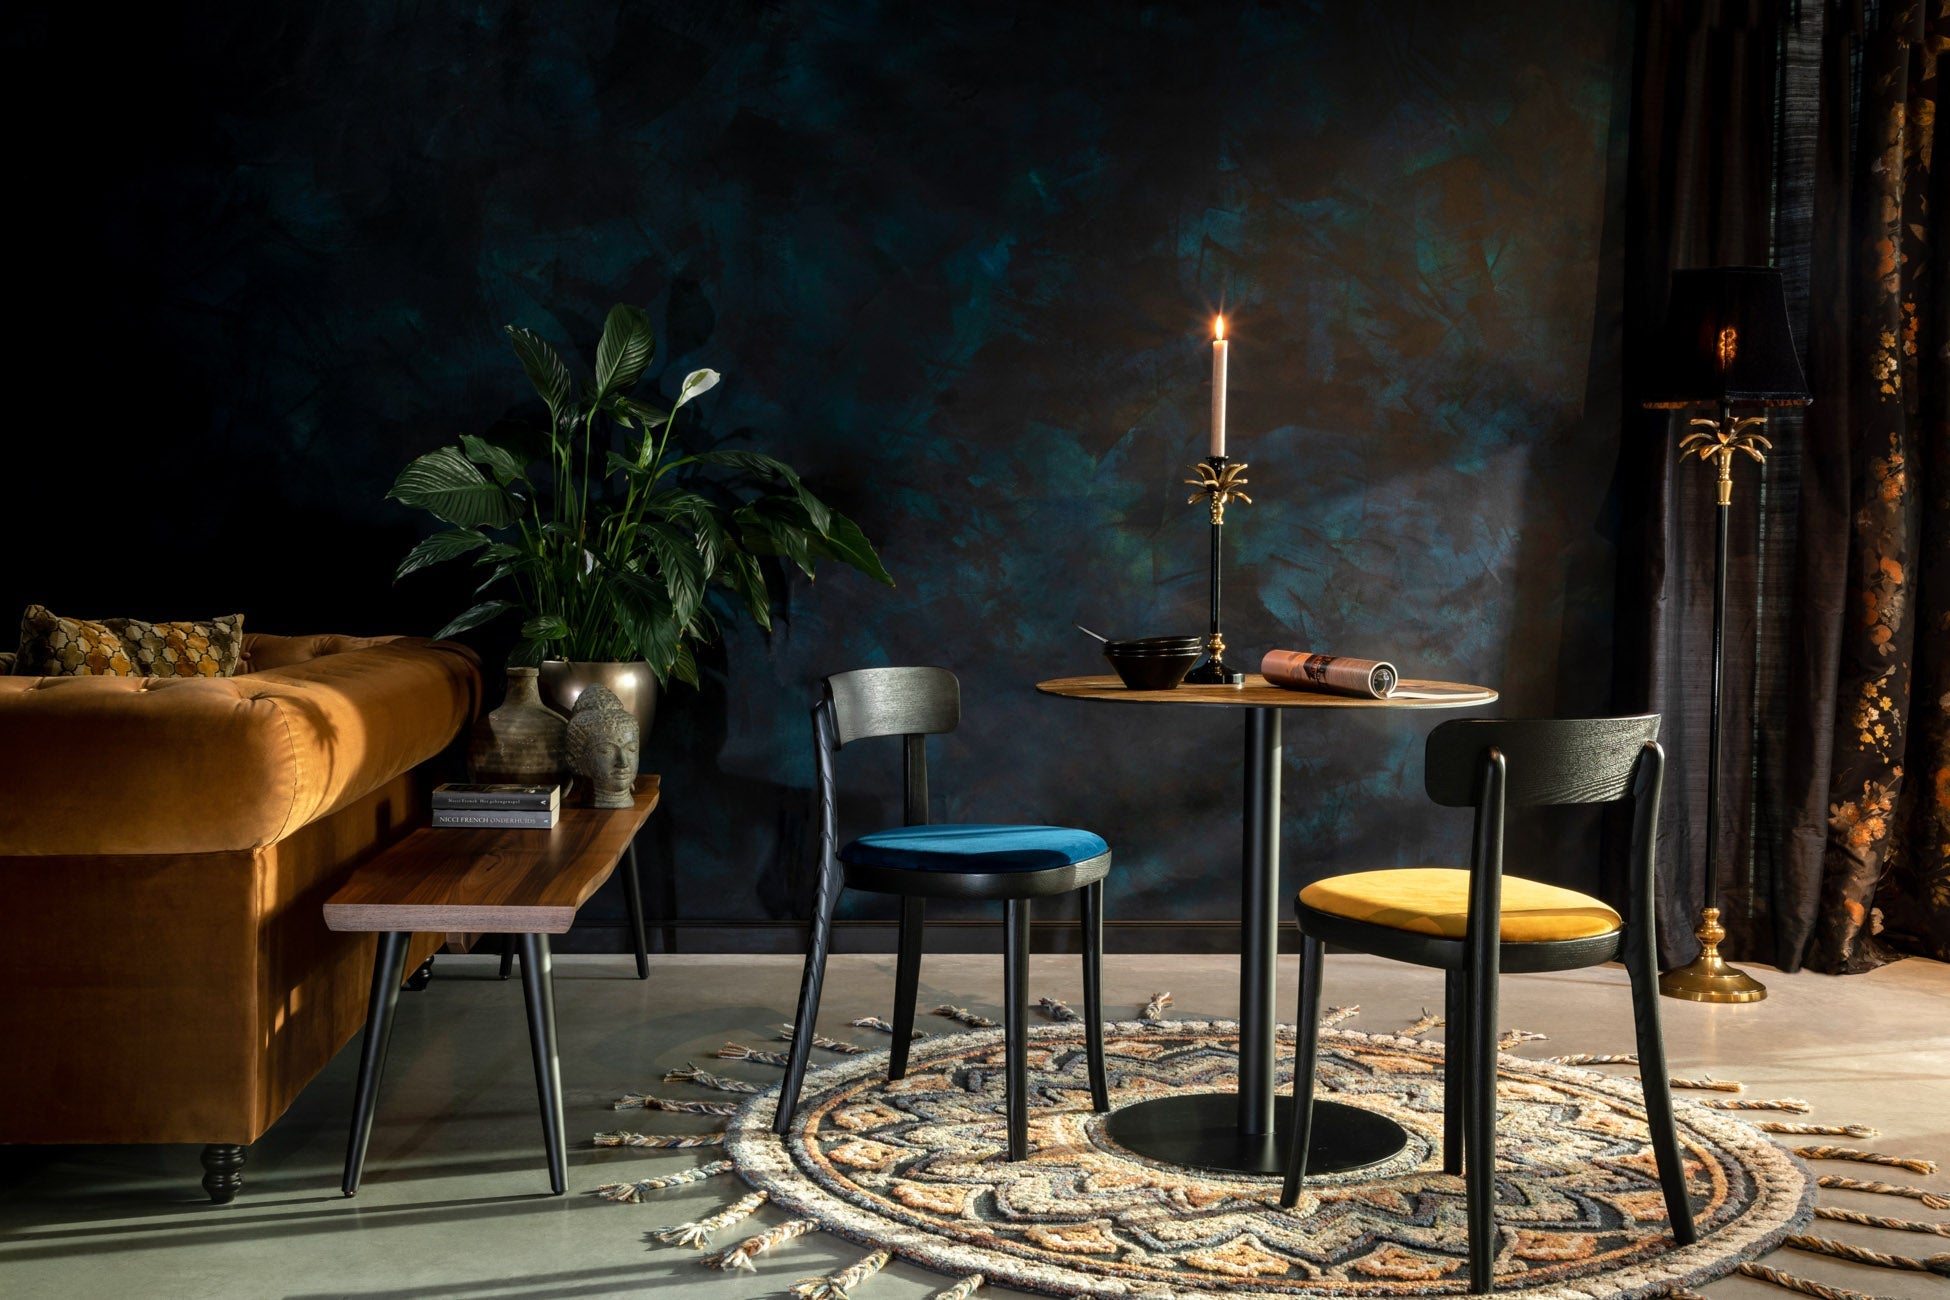 BRANDON chair blue, Dutchbone, Eye on Design